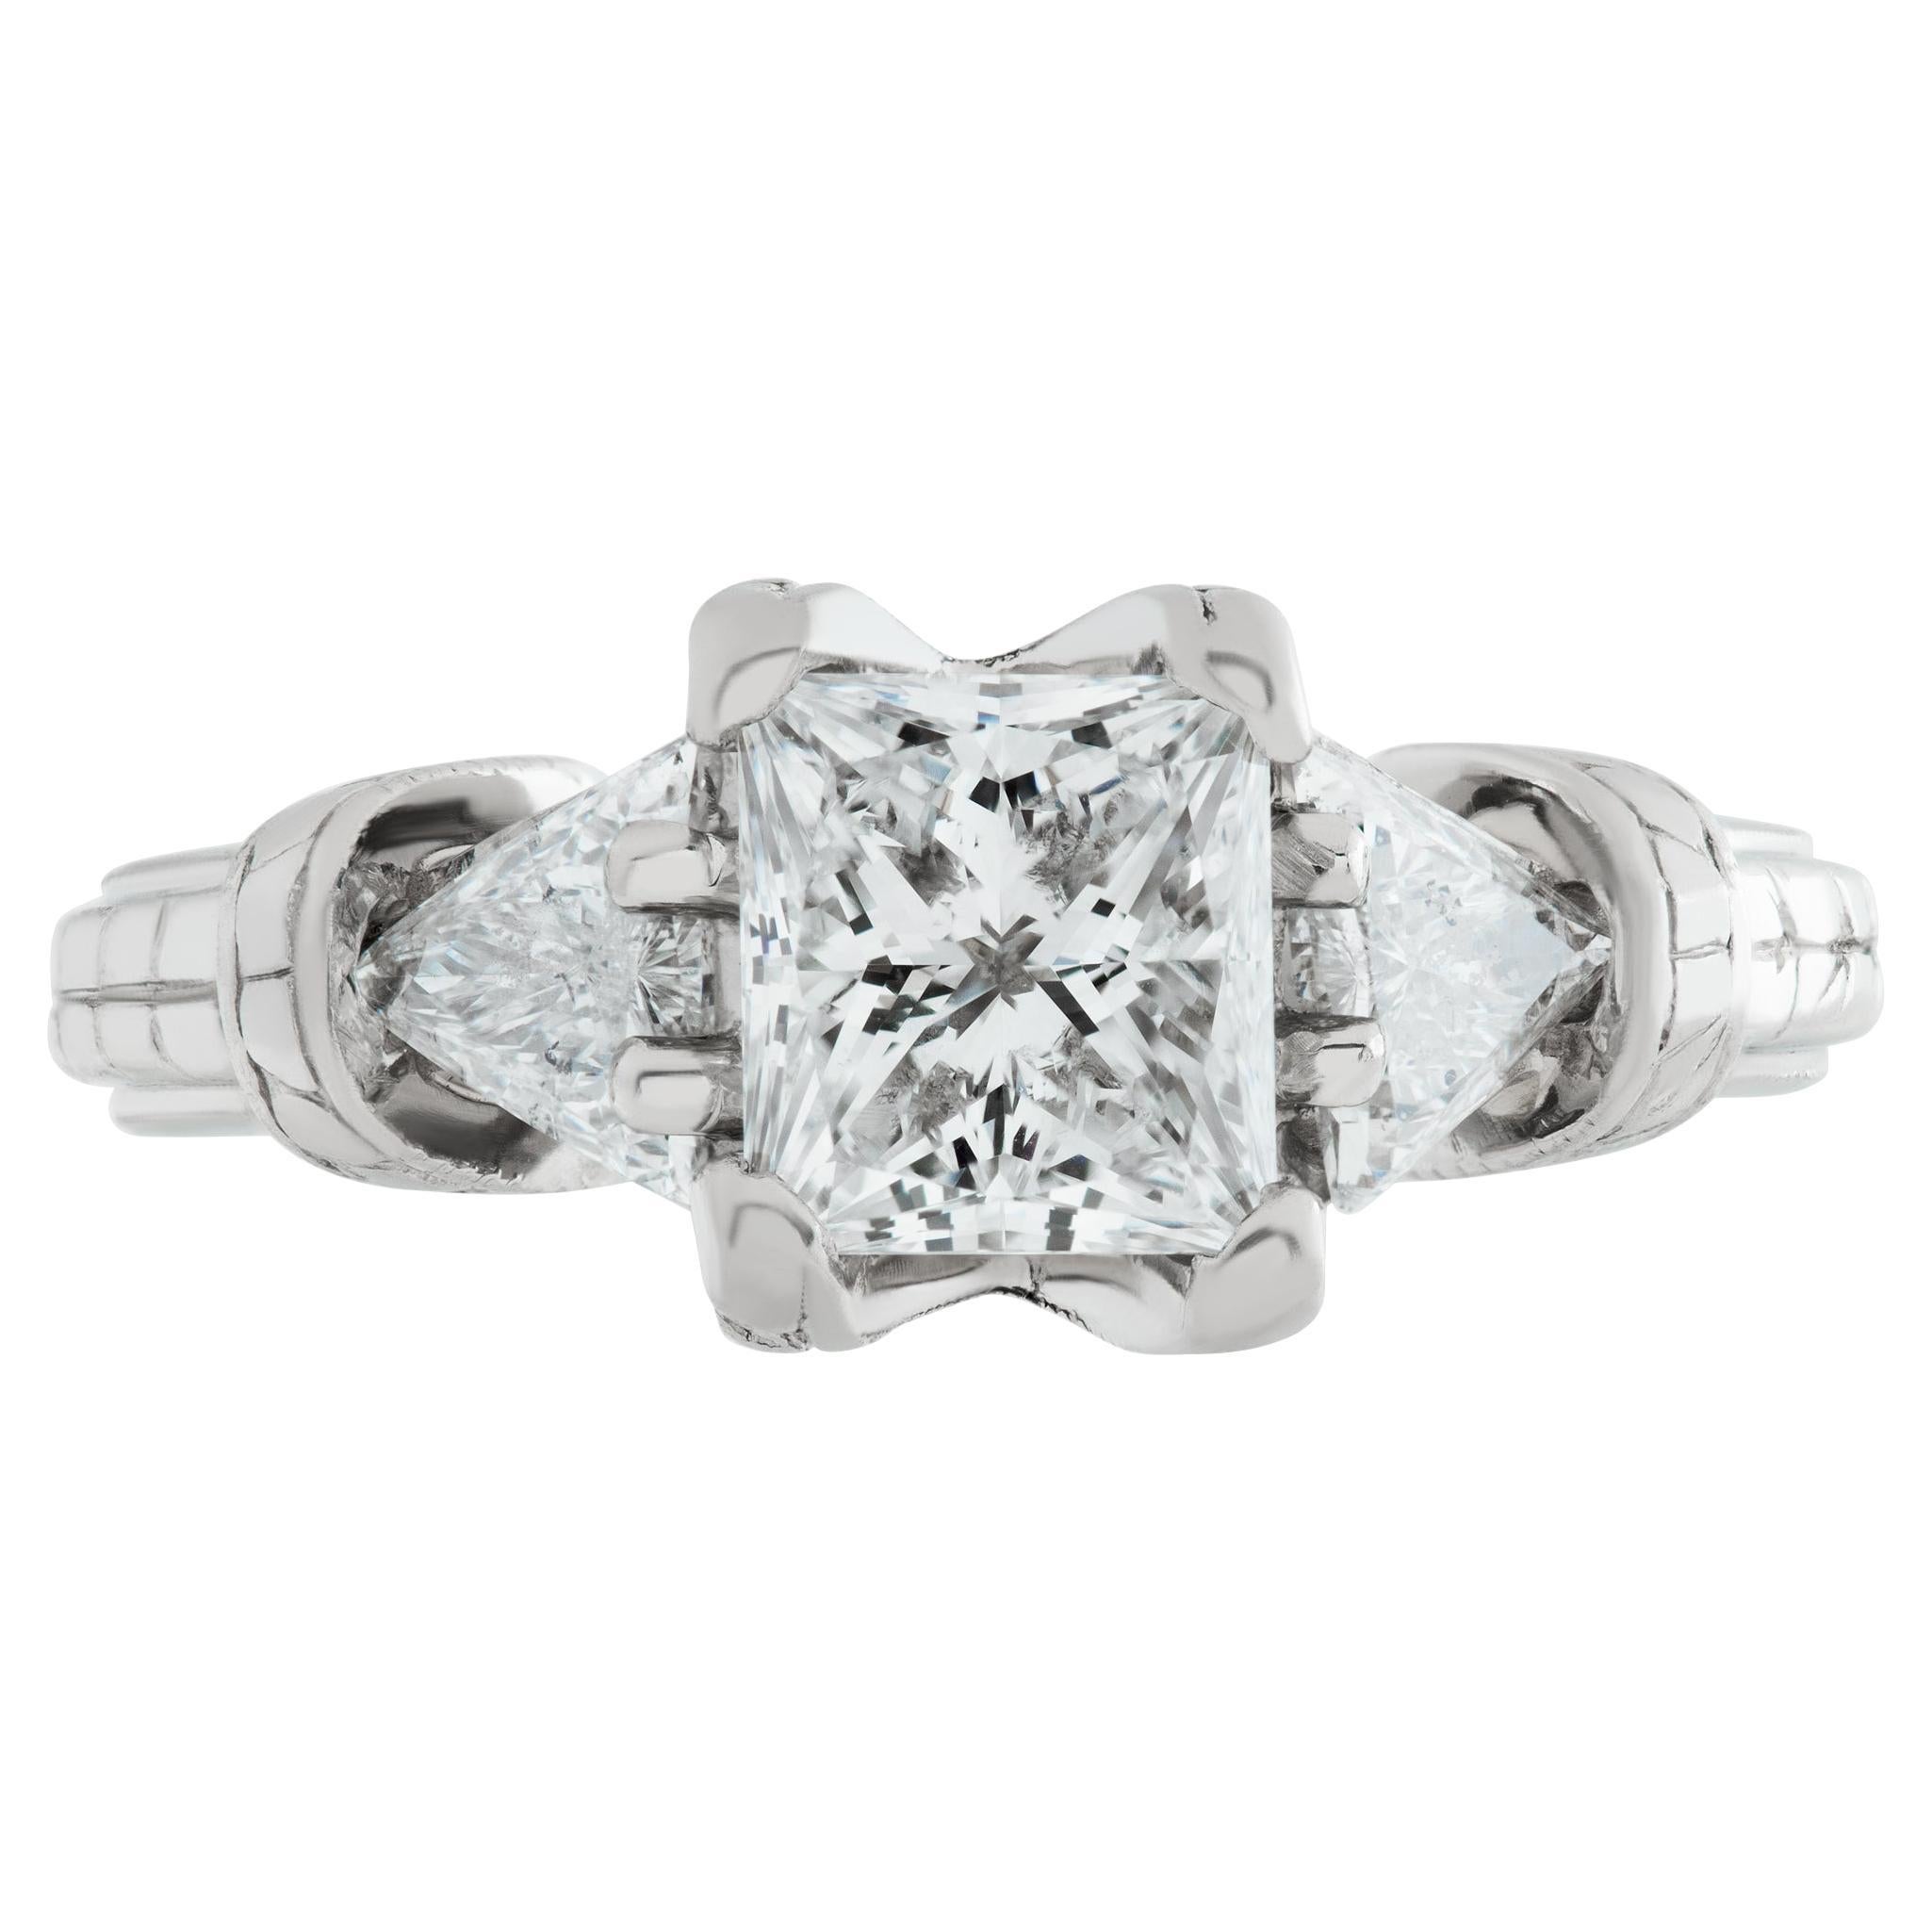 GIA Certified Emerald Cut Diamond 1.04 Carat 'D Color, VS1 Clarity' Ring